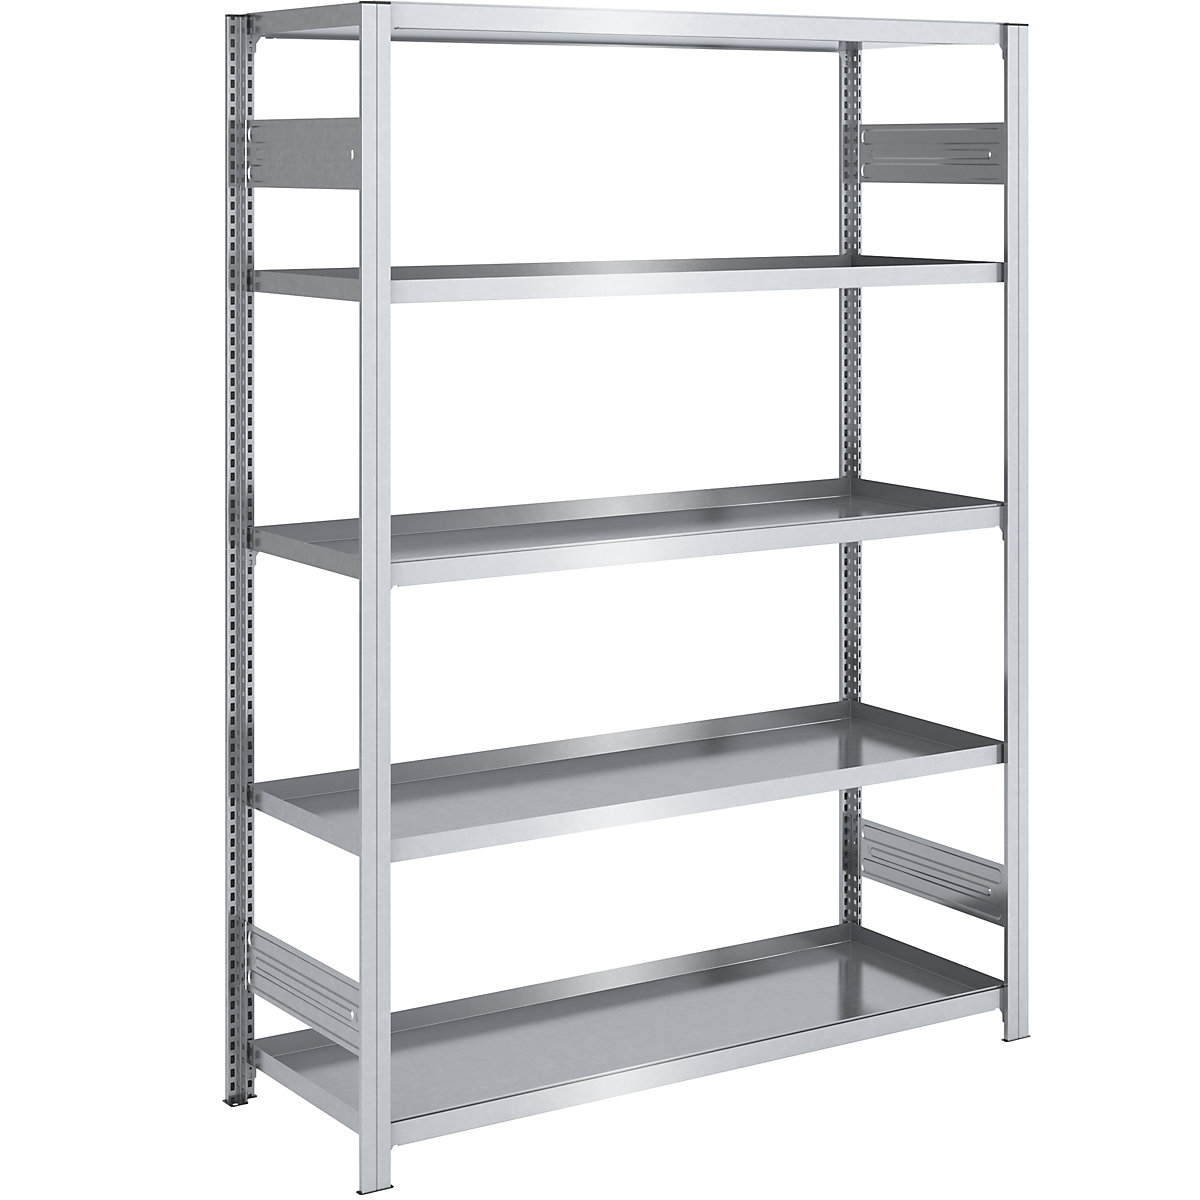 Tray shelf unit – hofe, shelf unit height 2000 mm, tray width 1300 mm, tray depth 600 mm, standard shelf unit